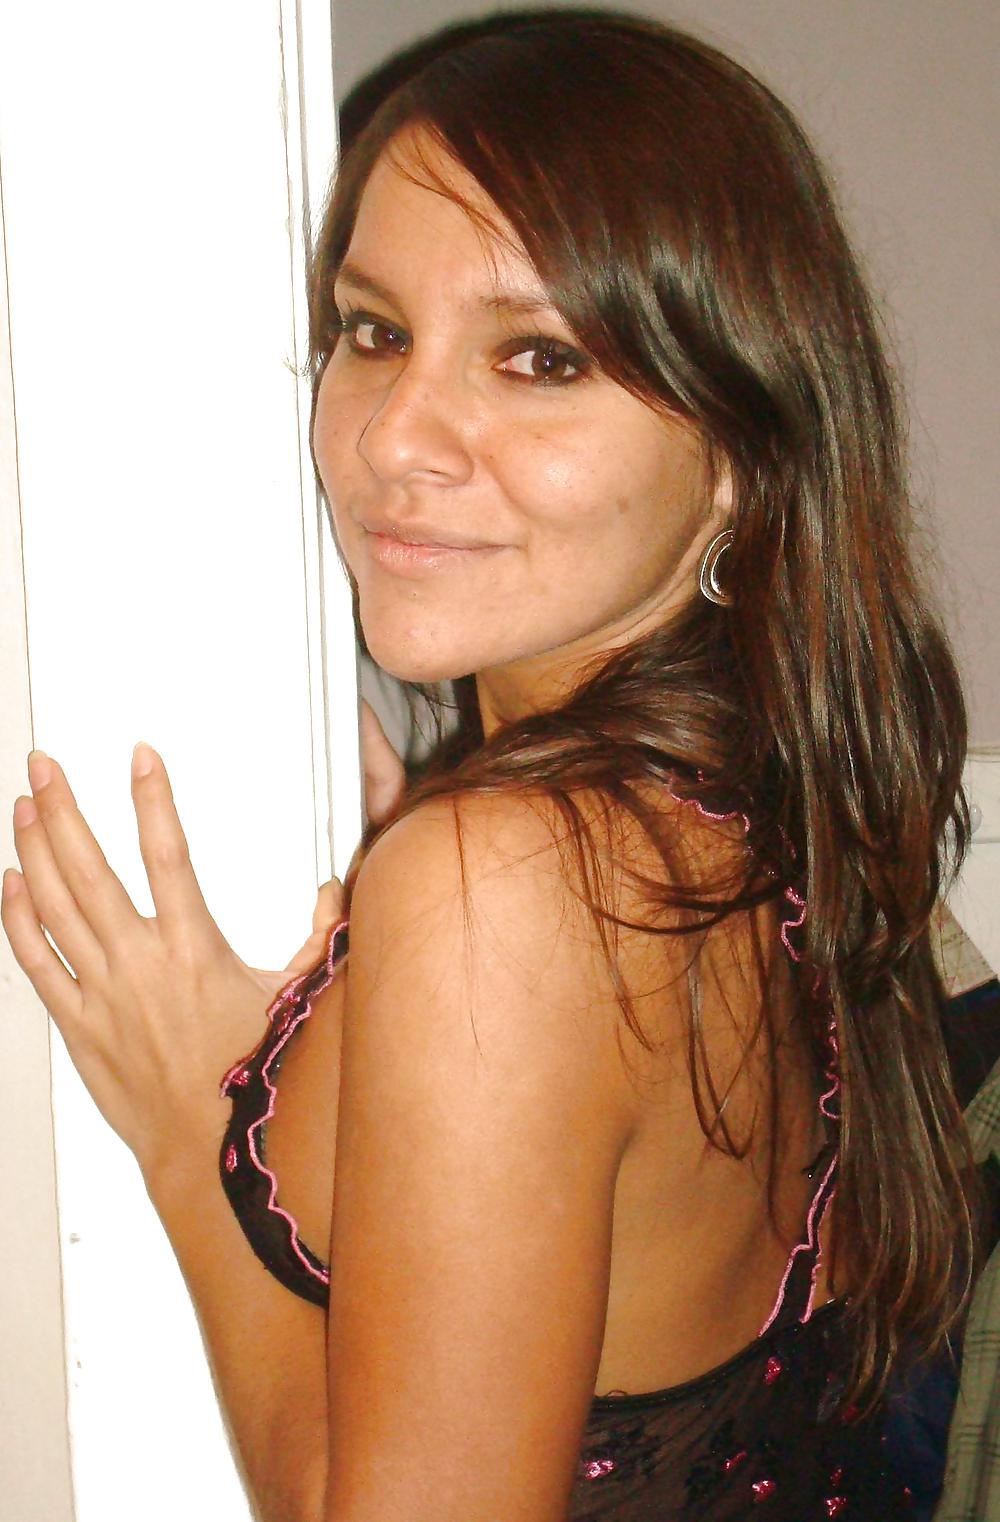 Sex HOT SEXY BRAZILIAN GIRL I image